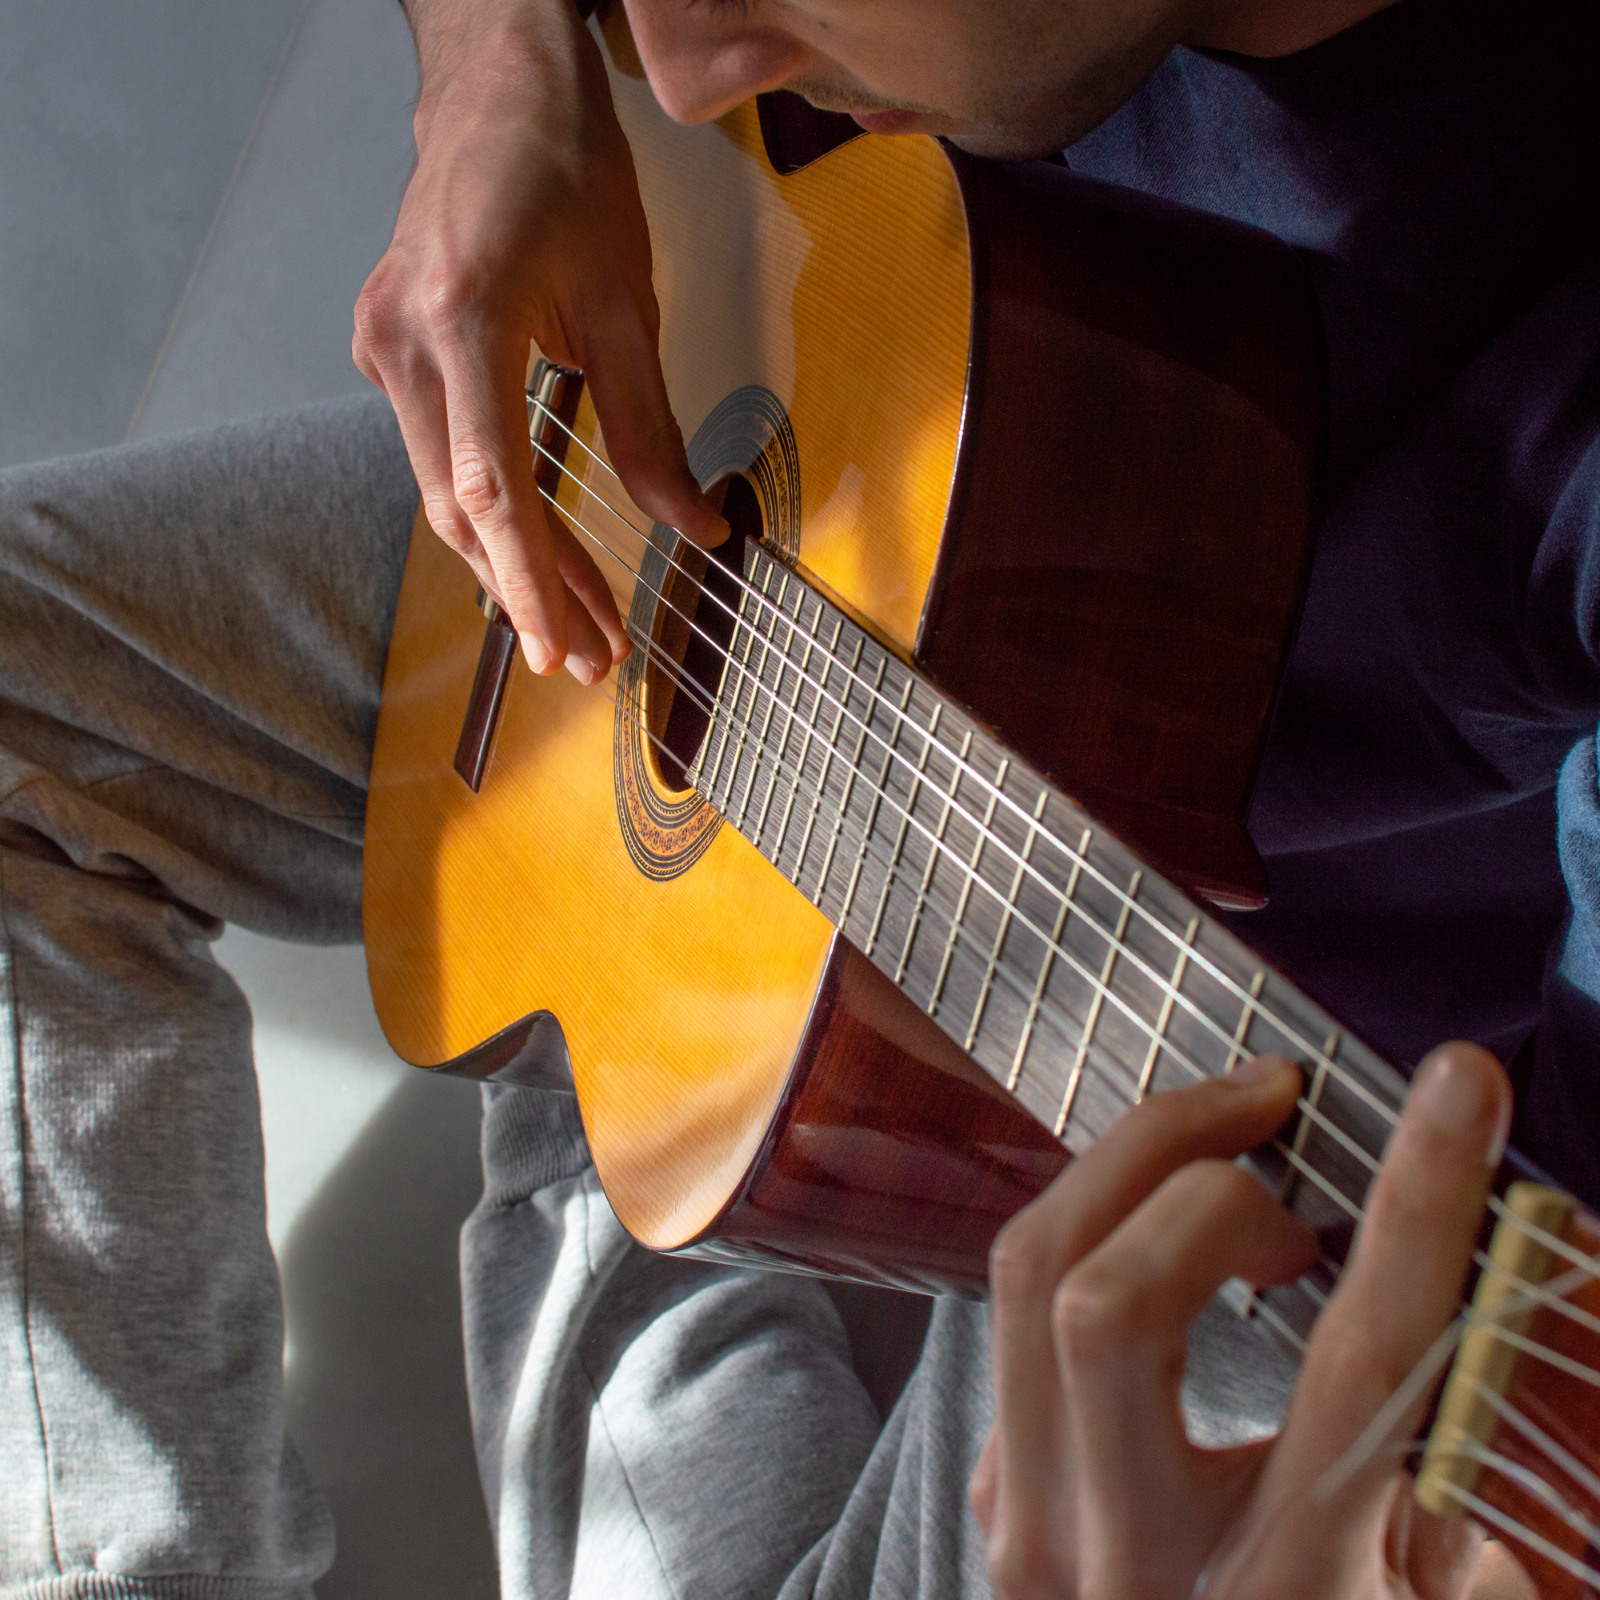 Cours de guitare jazz ou flamenco adulte 50 minutes : miniature 1